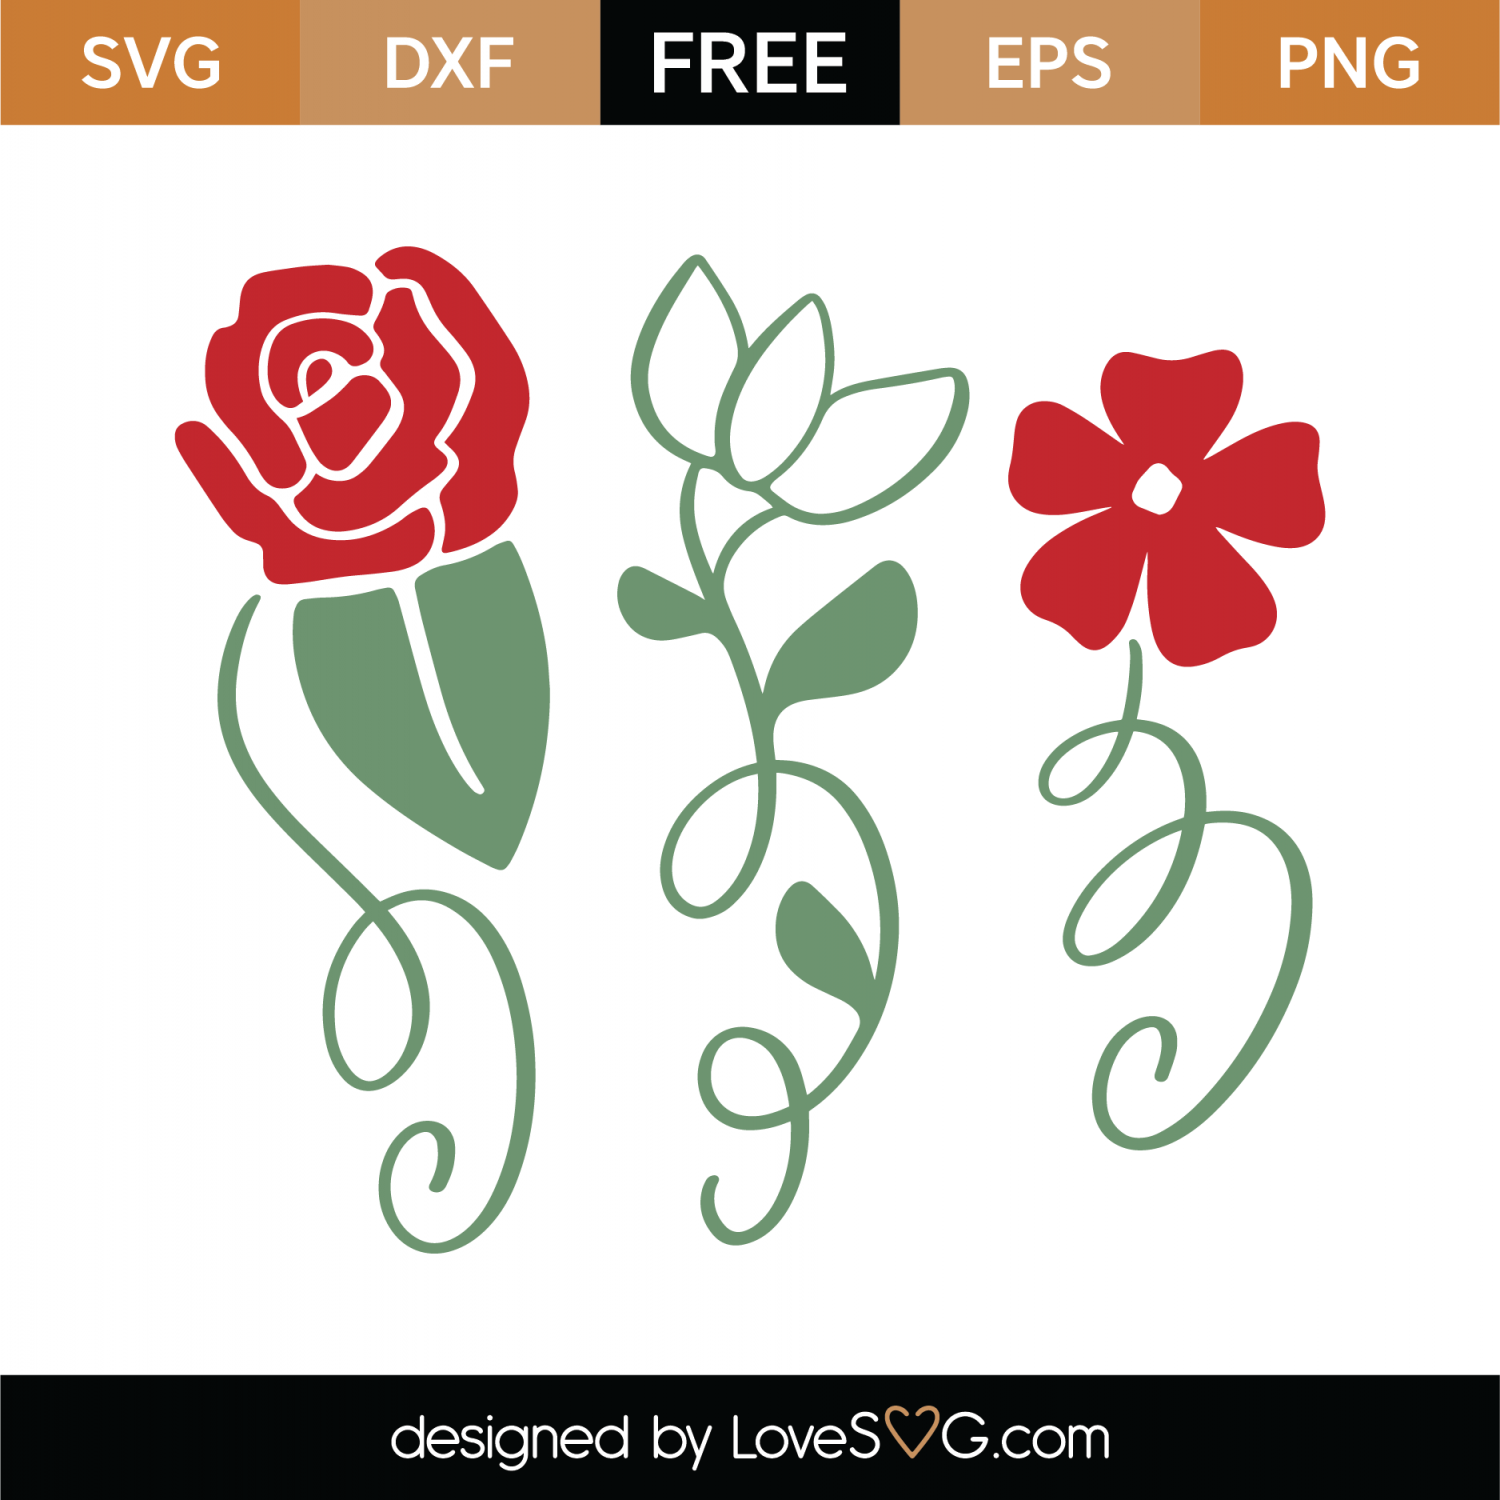 Download Free Roses SVG Cut File | Lovesvg.com